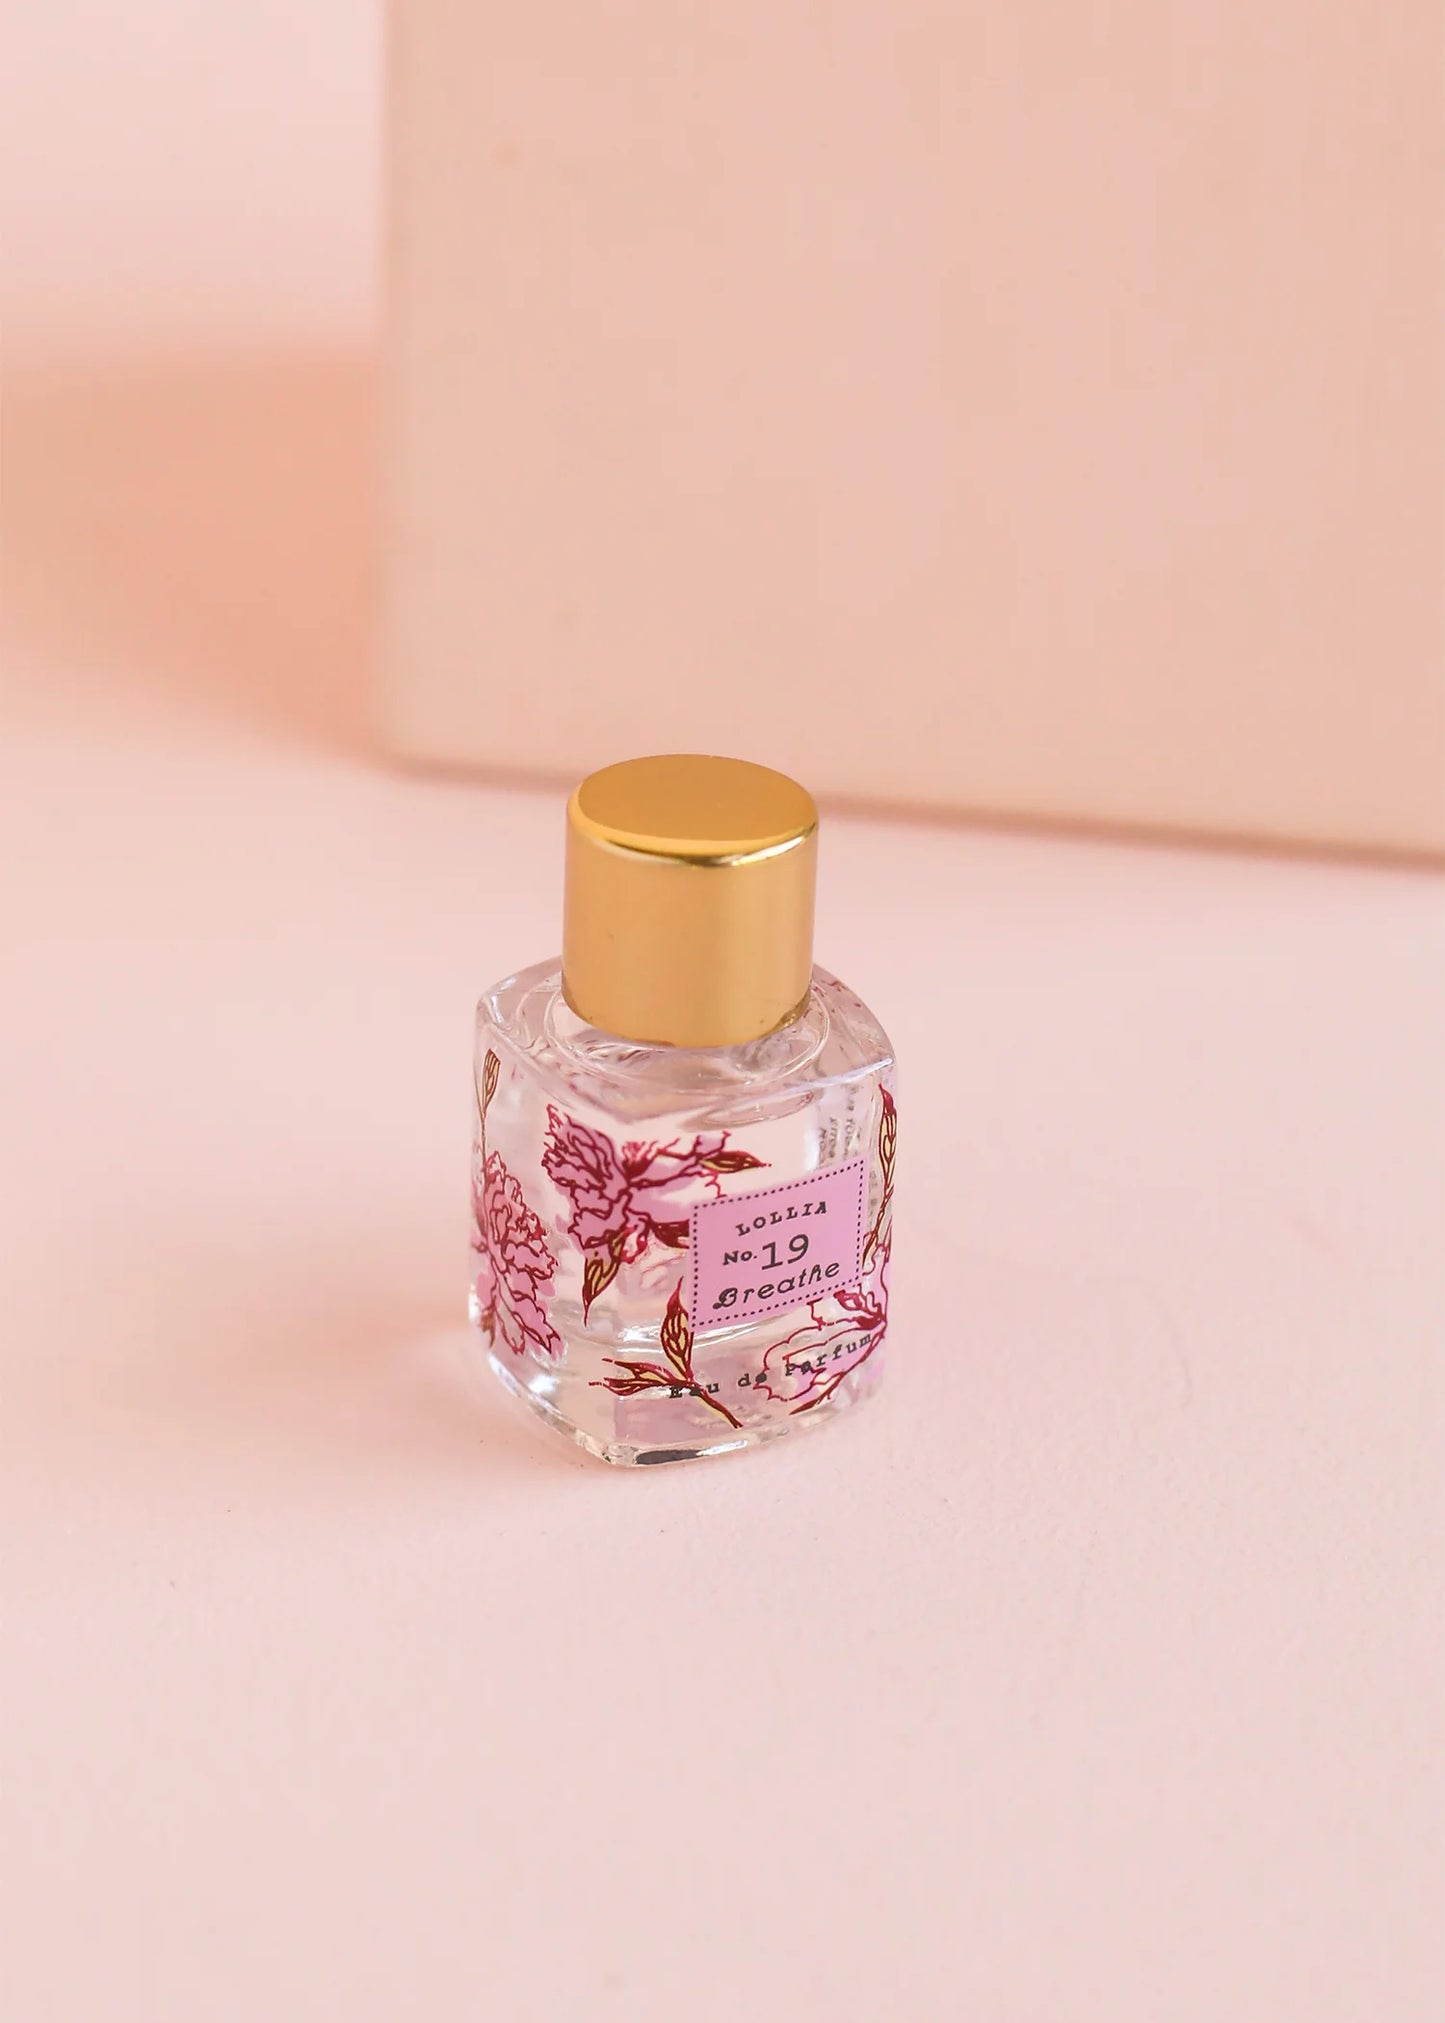 Lollia - Little Luxe Eau de Parfum - Breathe